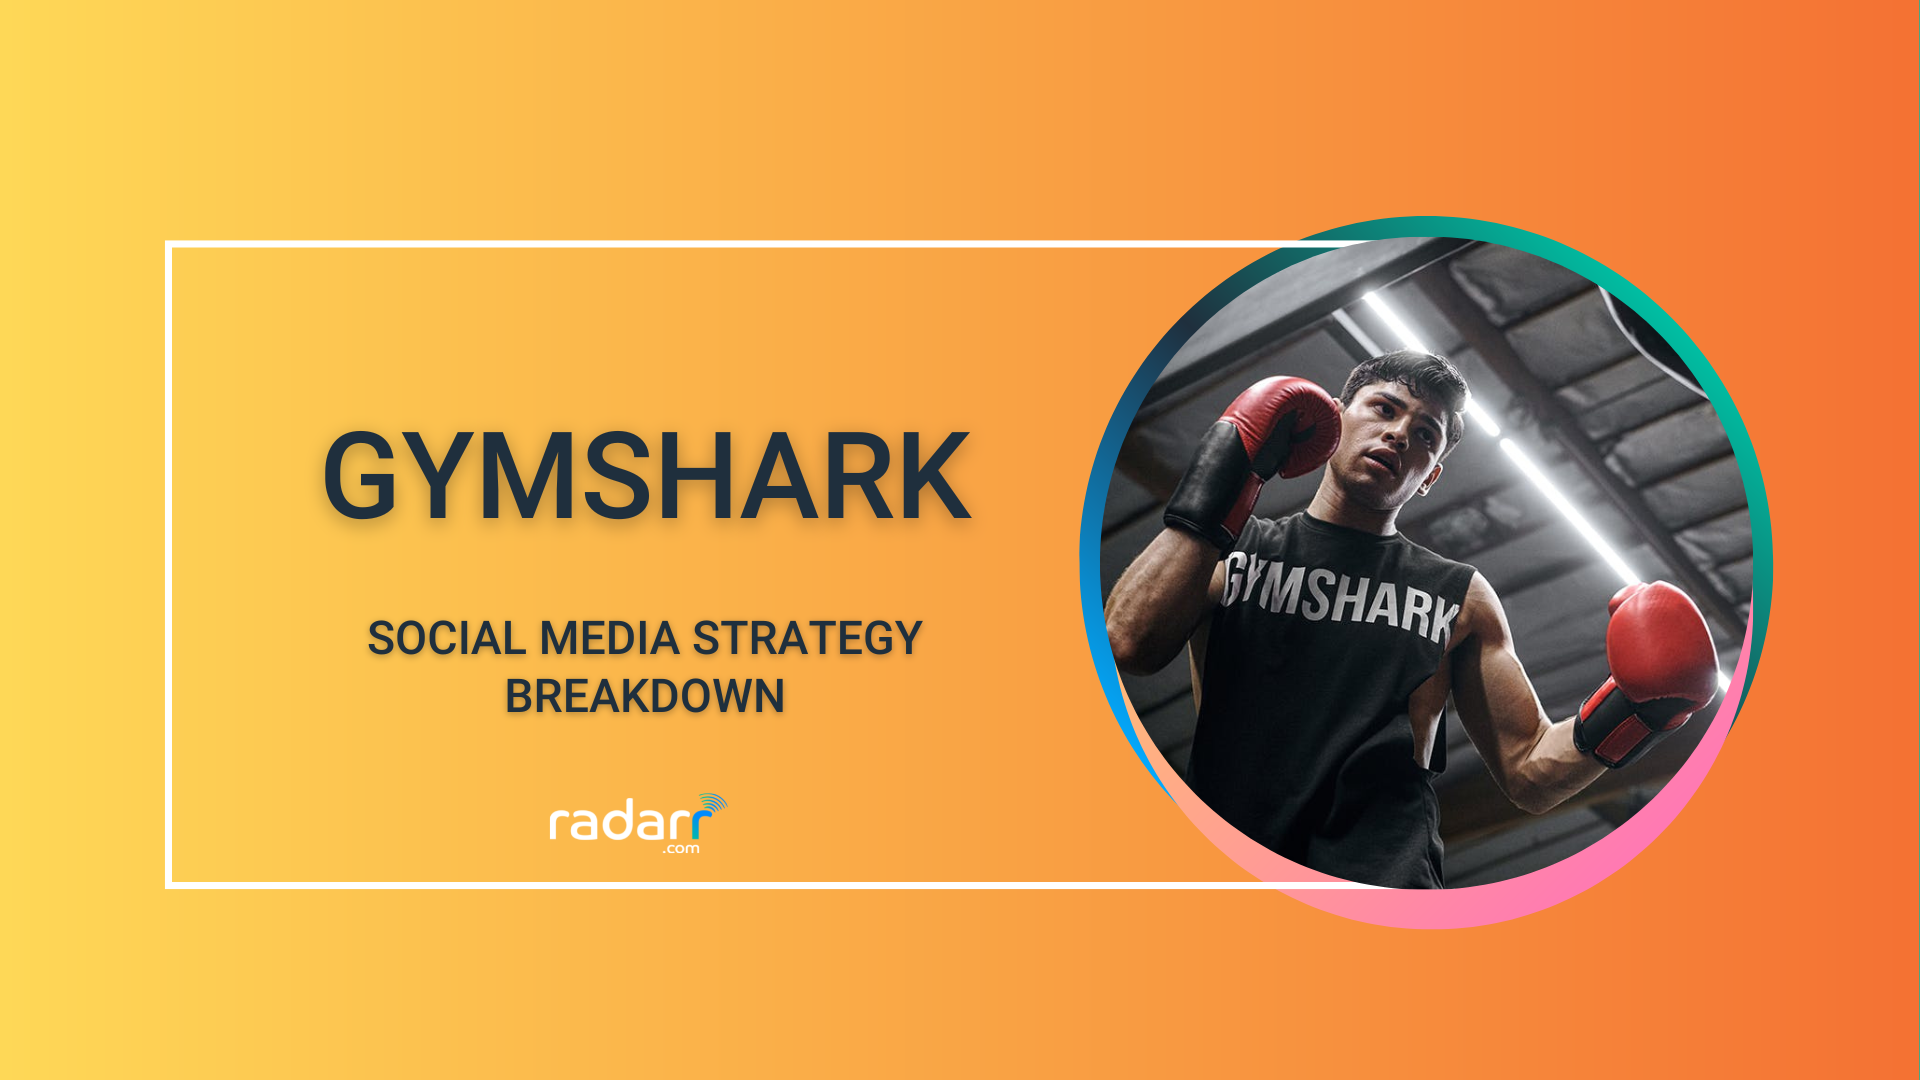 Gymshark social media strategy